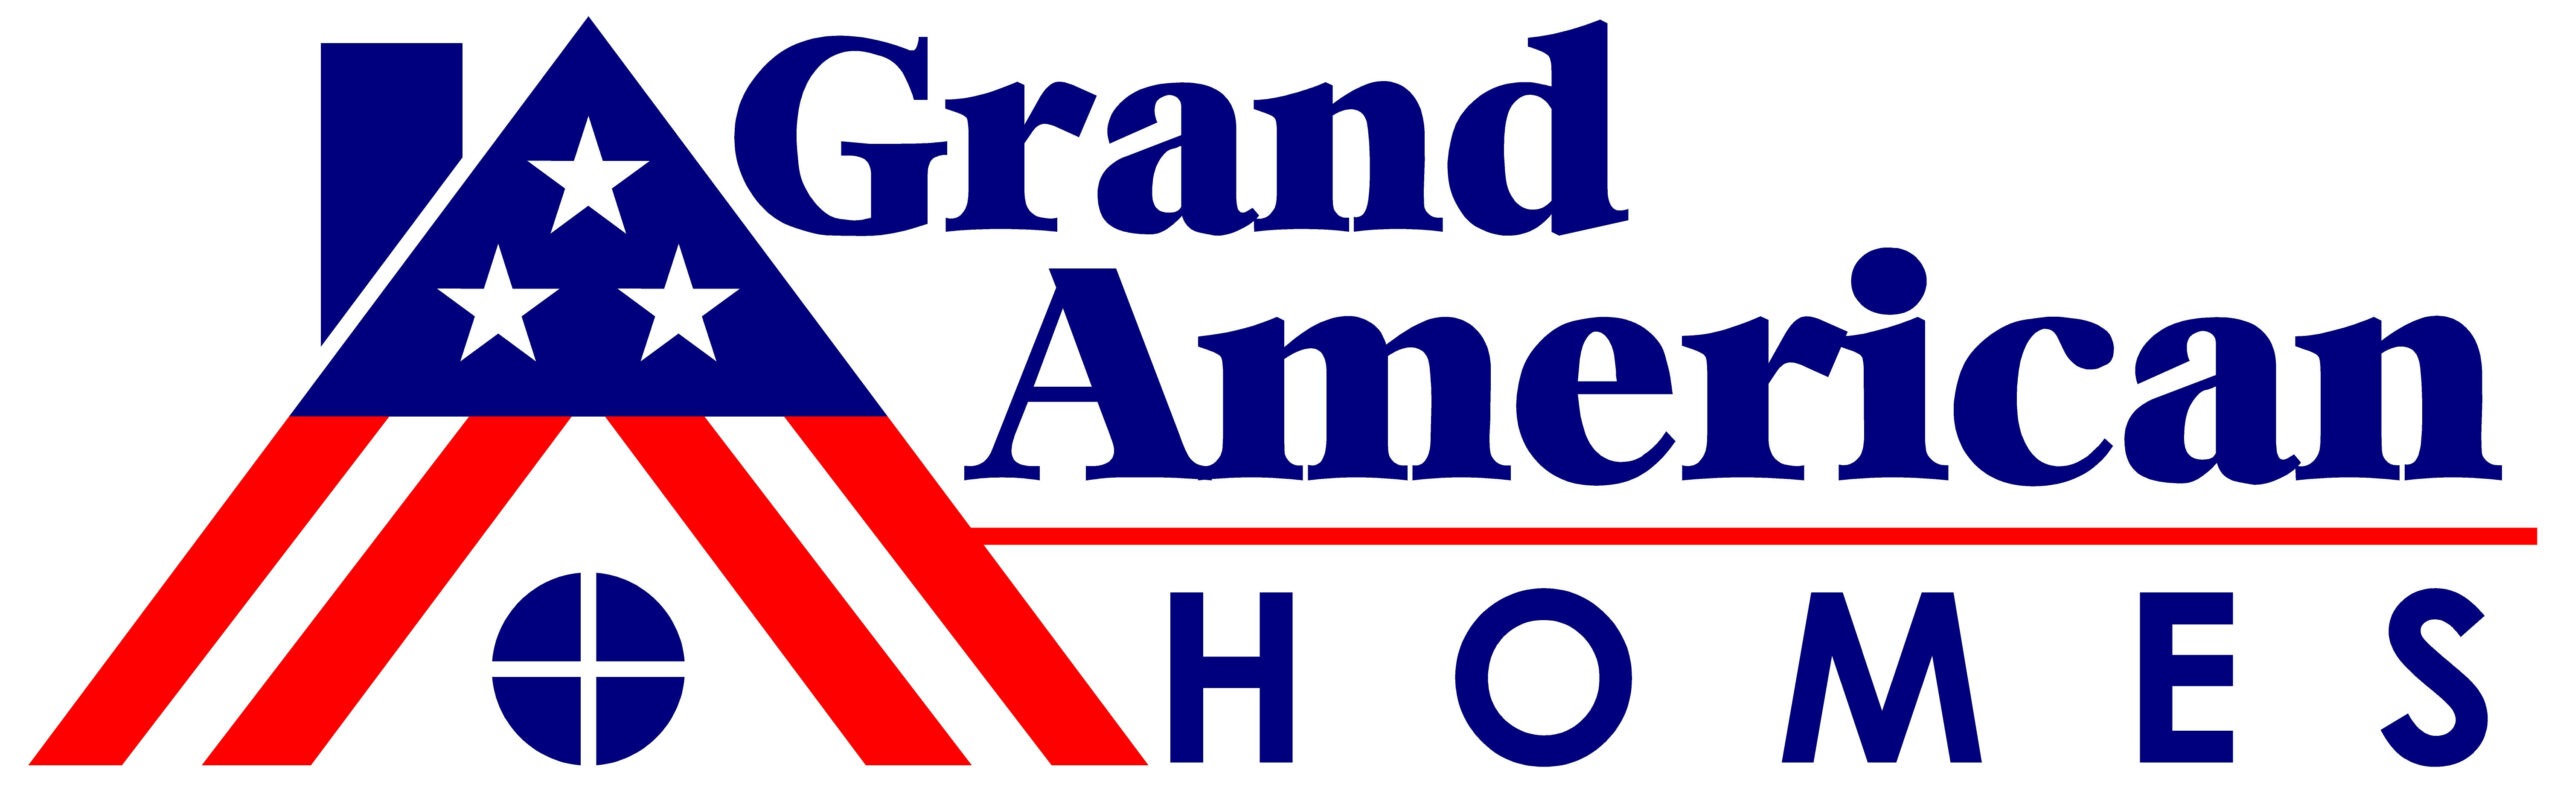 Grand American Homes Company Logo